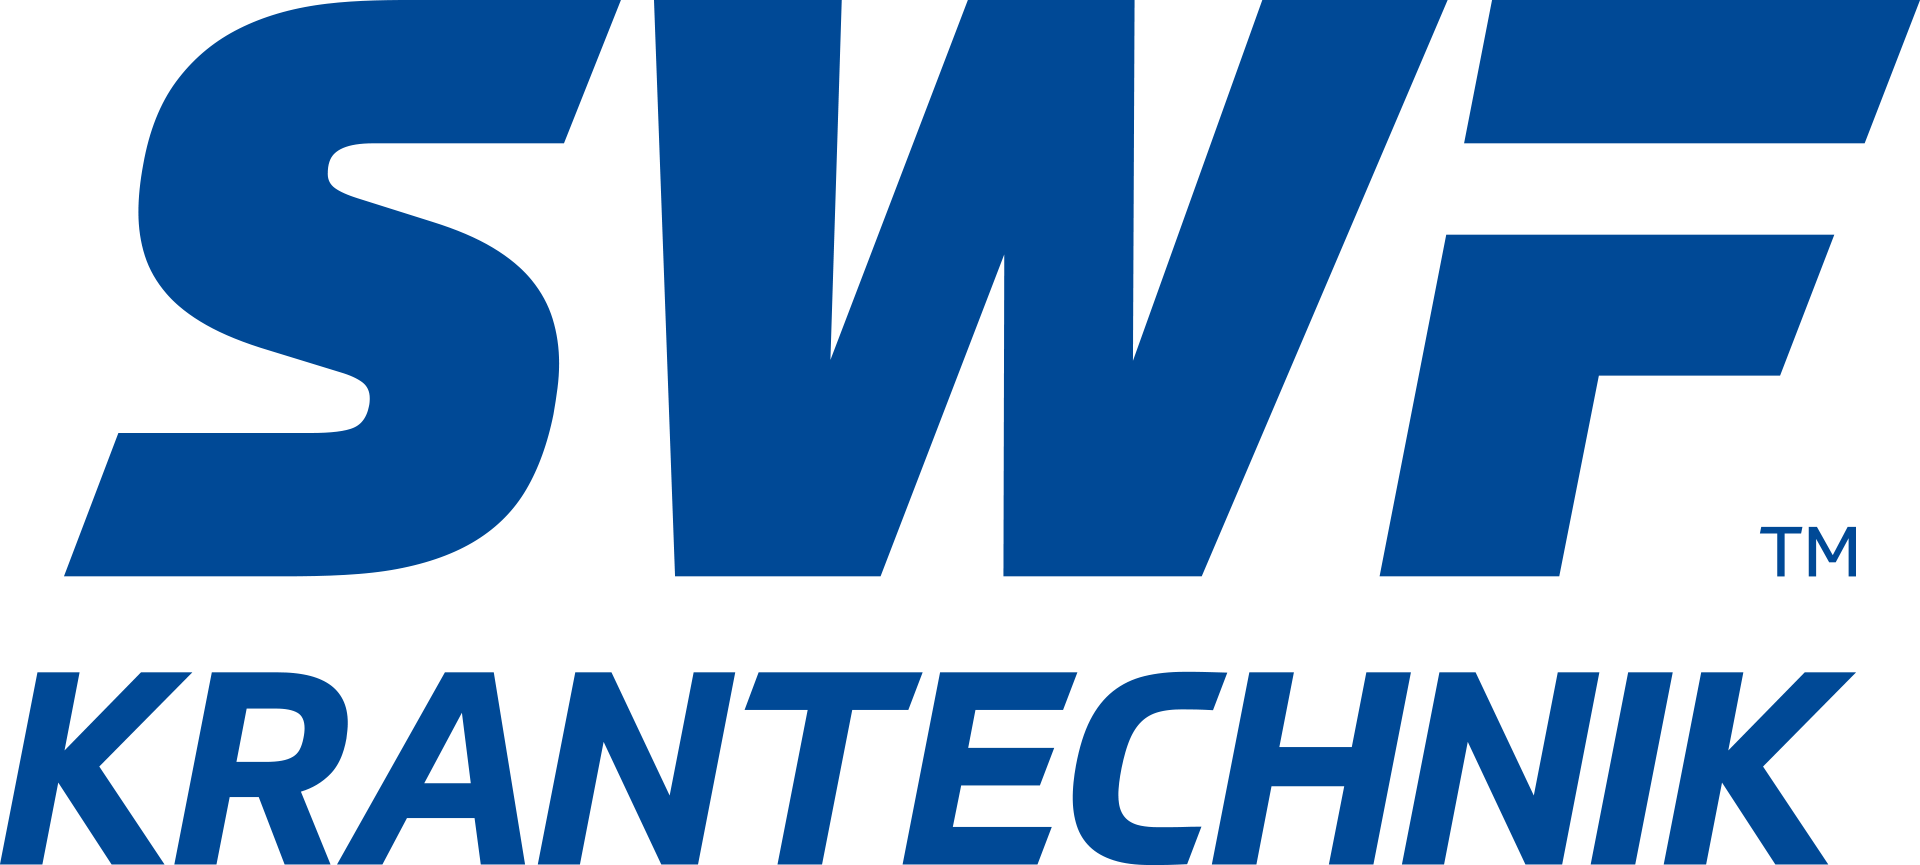 swf_krantechnik_logo2019_blue_transparent_rgb